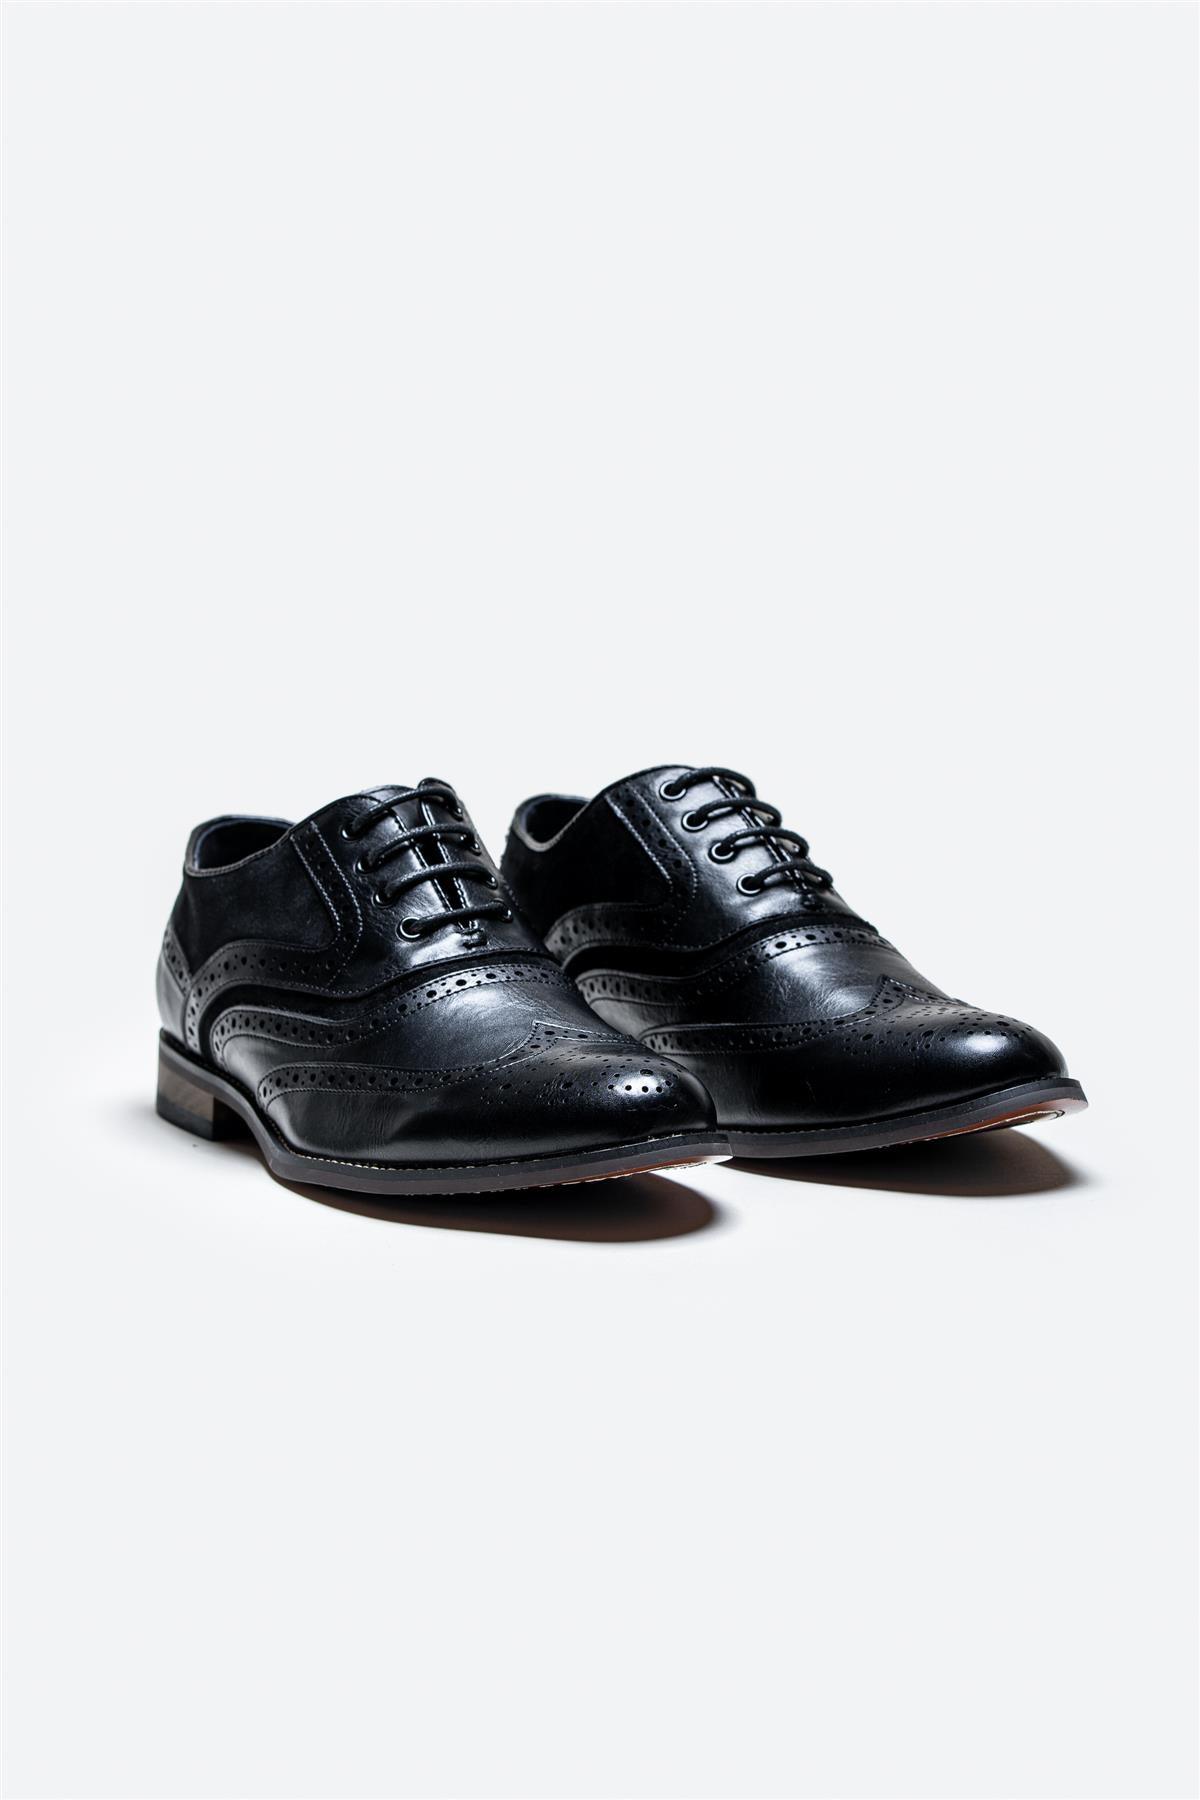 Russel black/black shoe front